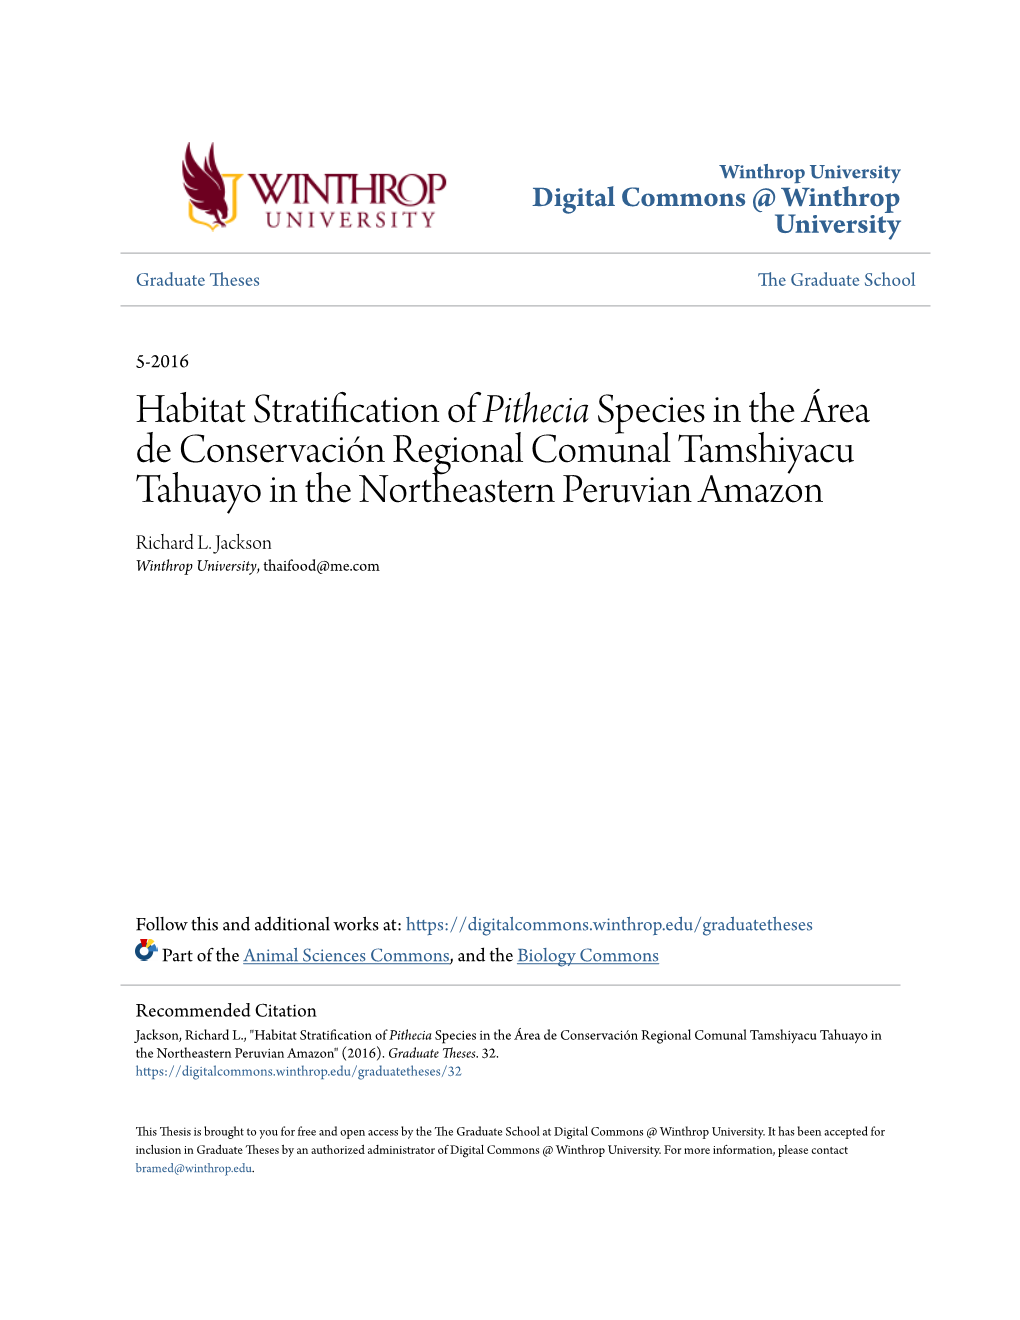 Habitat Stratification of Pithecia Species in the Área De Conservación Regional Comunal Tamshiyacu Tahuayo in the Northeastern Peruvian Amazon Richard L